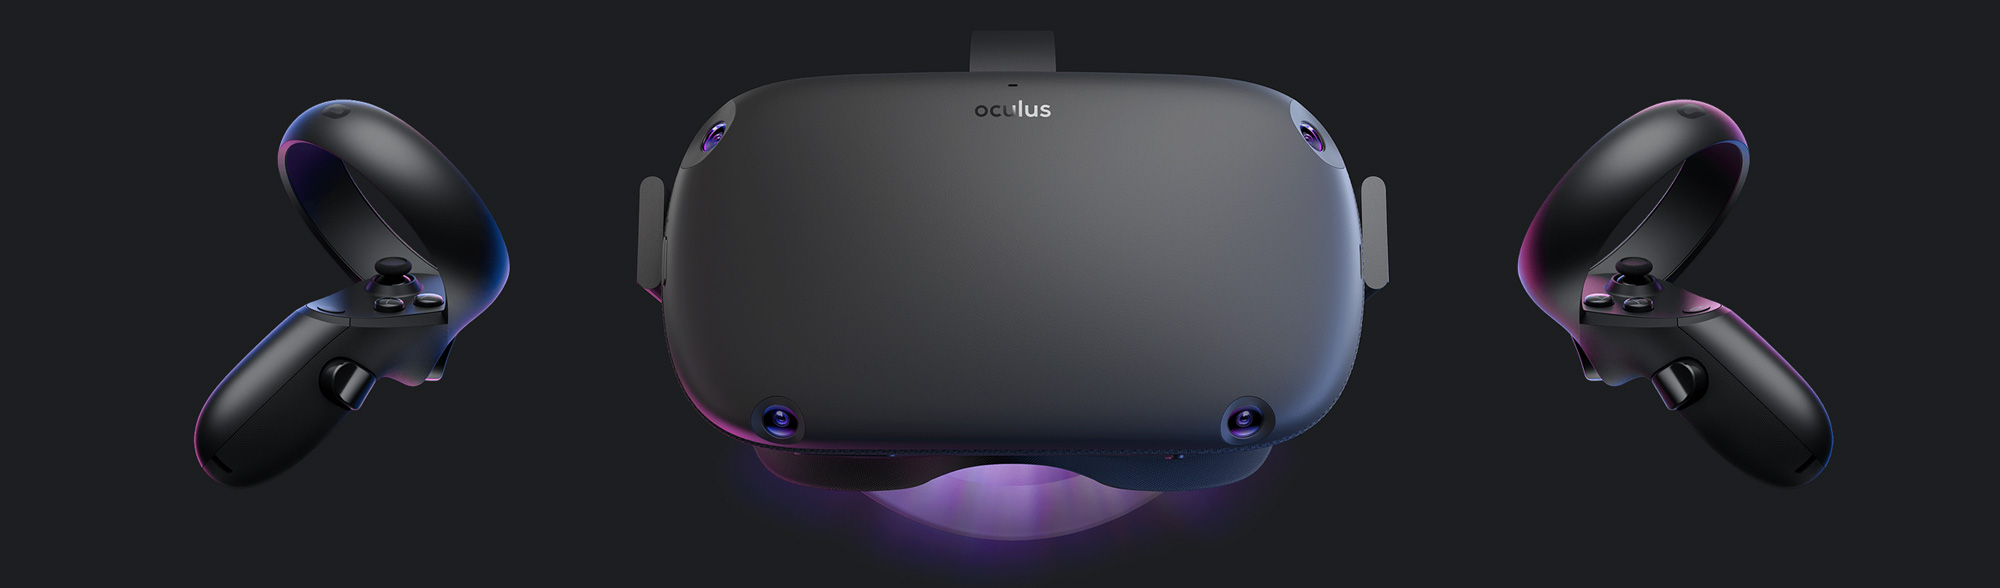 oculus rift s price increase